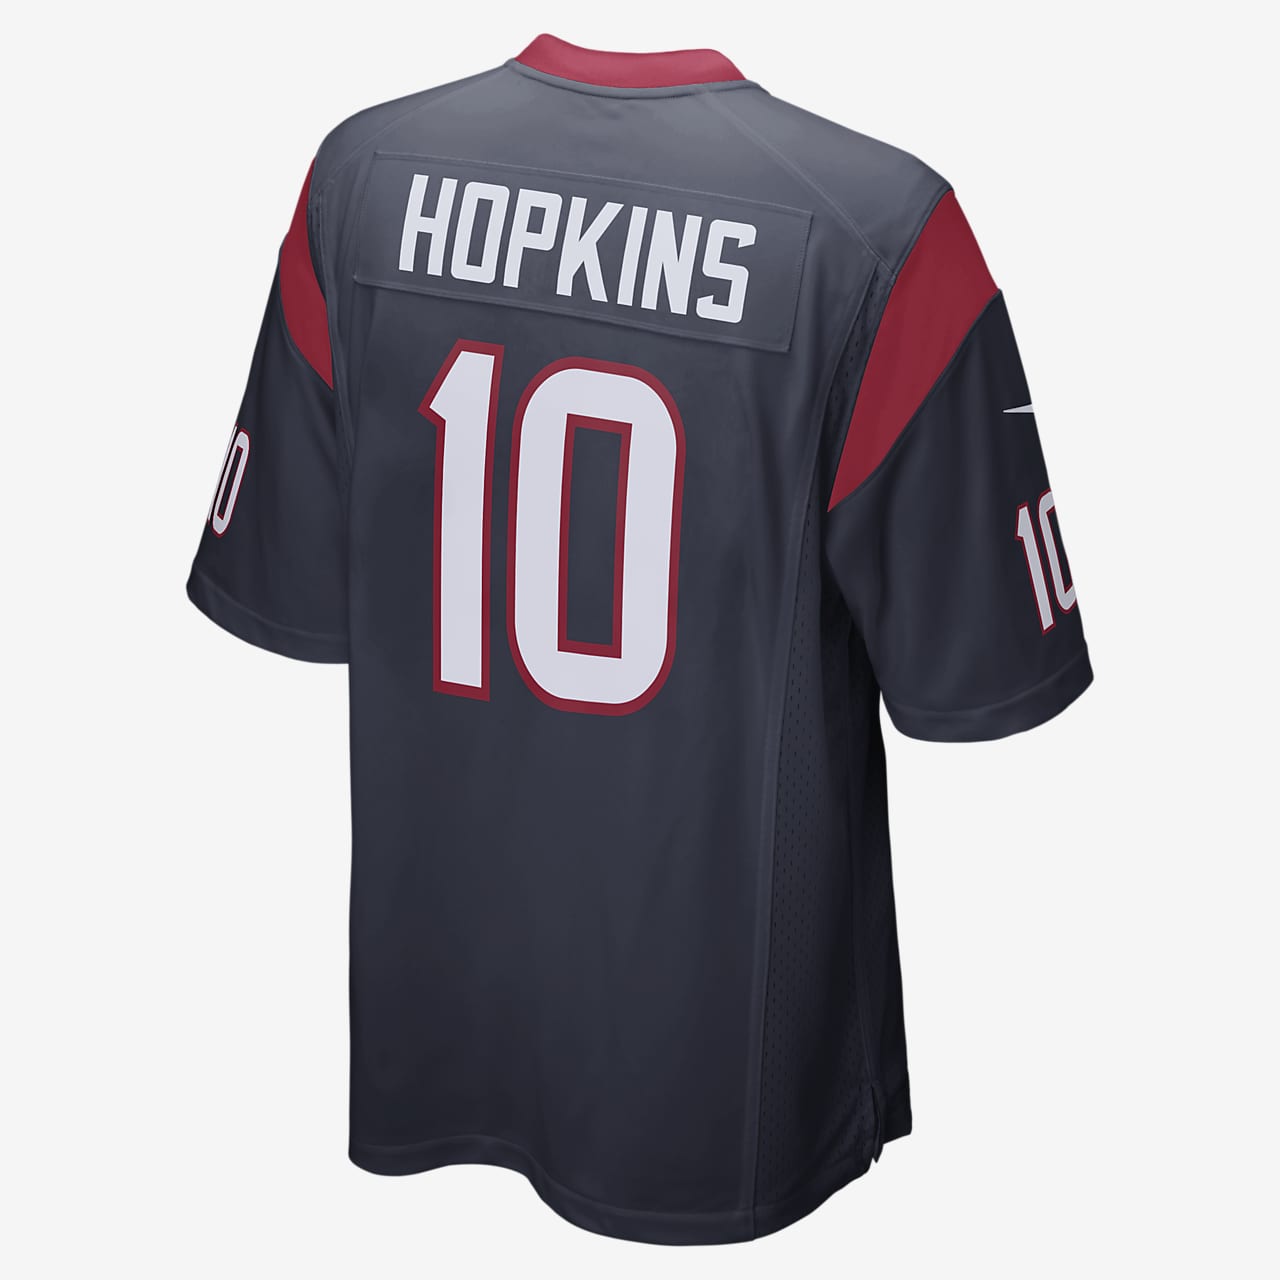 deandre hopkins jersey cheap